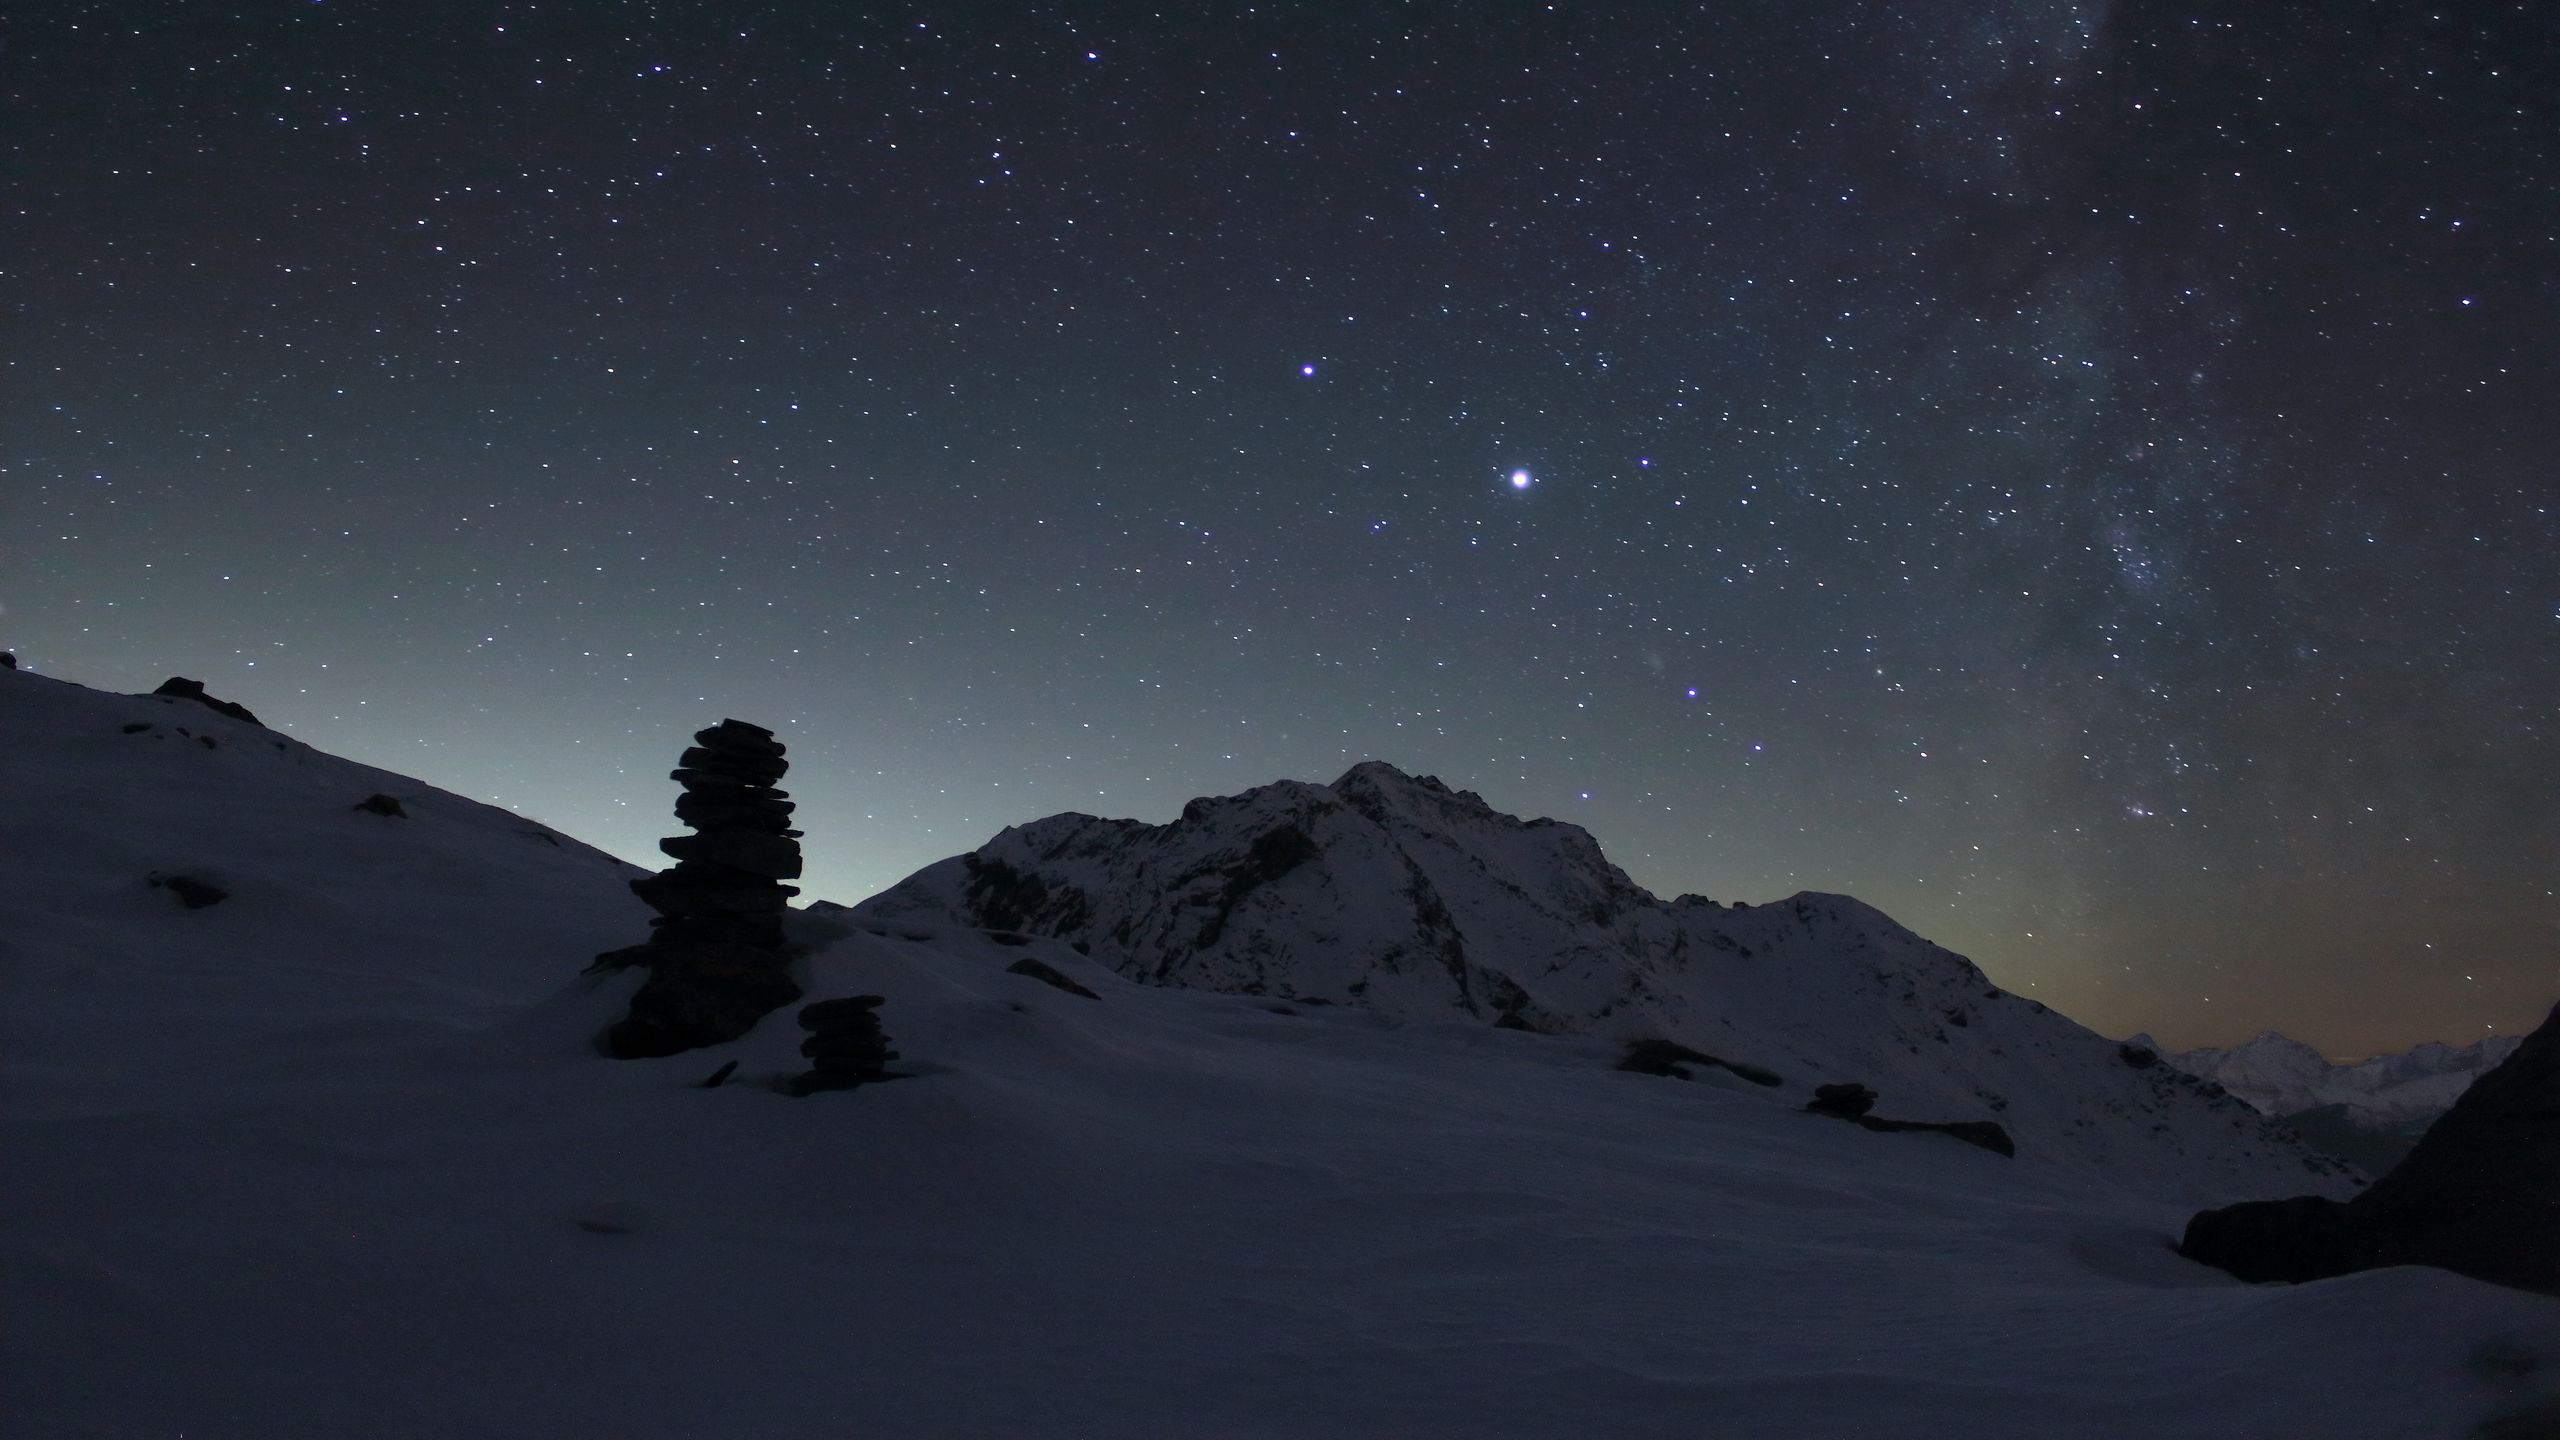 Download wallpaper 2560x1440 mountain, night, snow, starry sky, dark widescreen 16:9 HD background